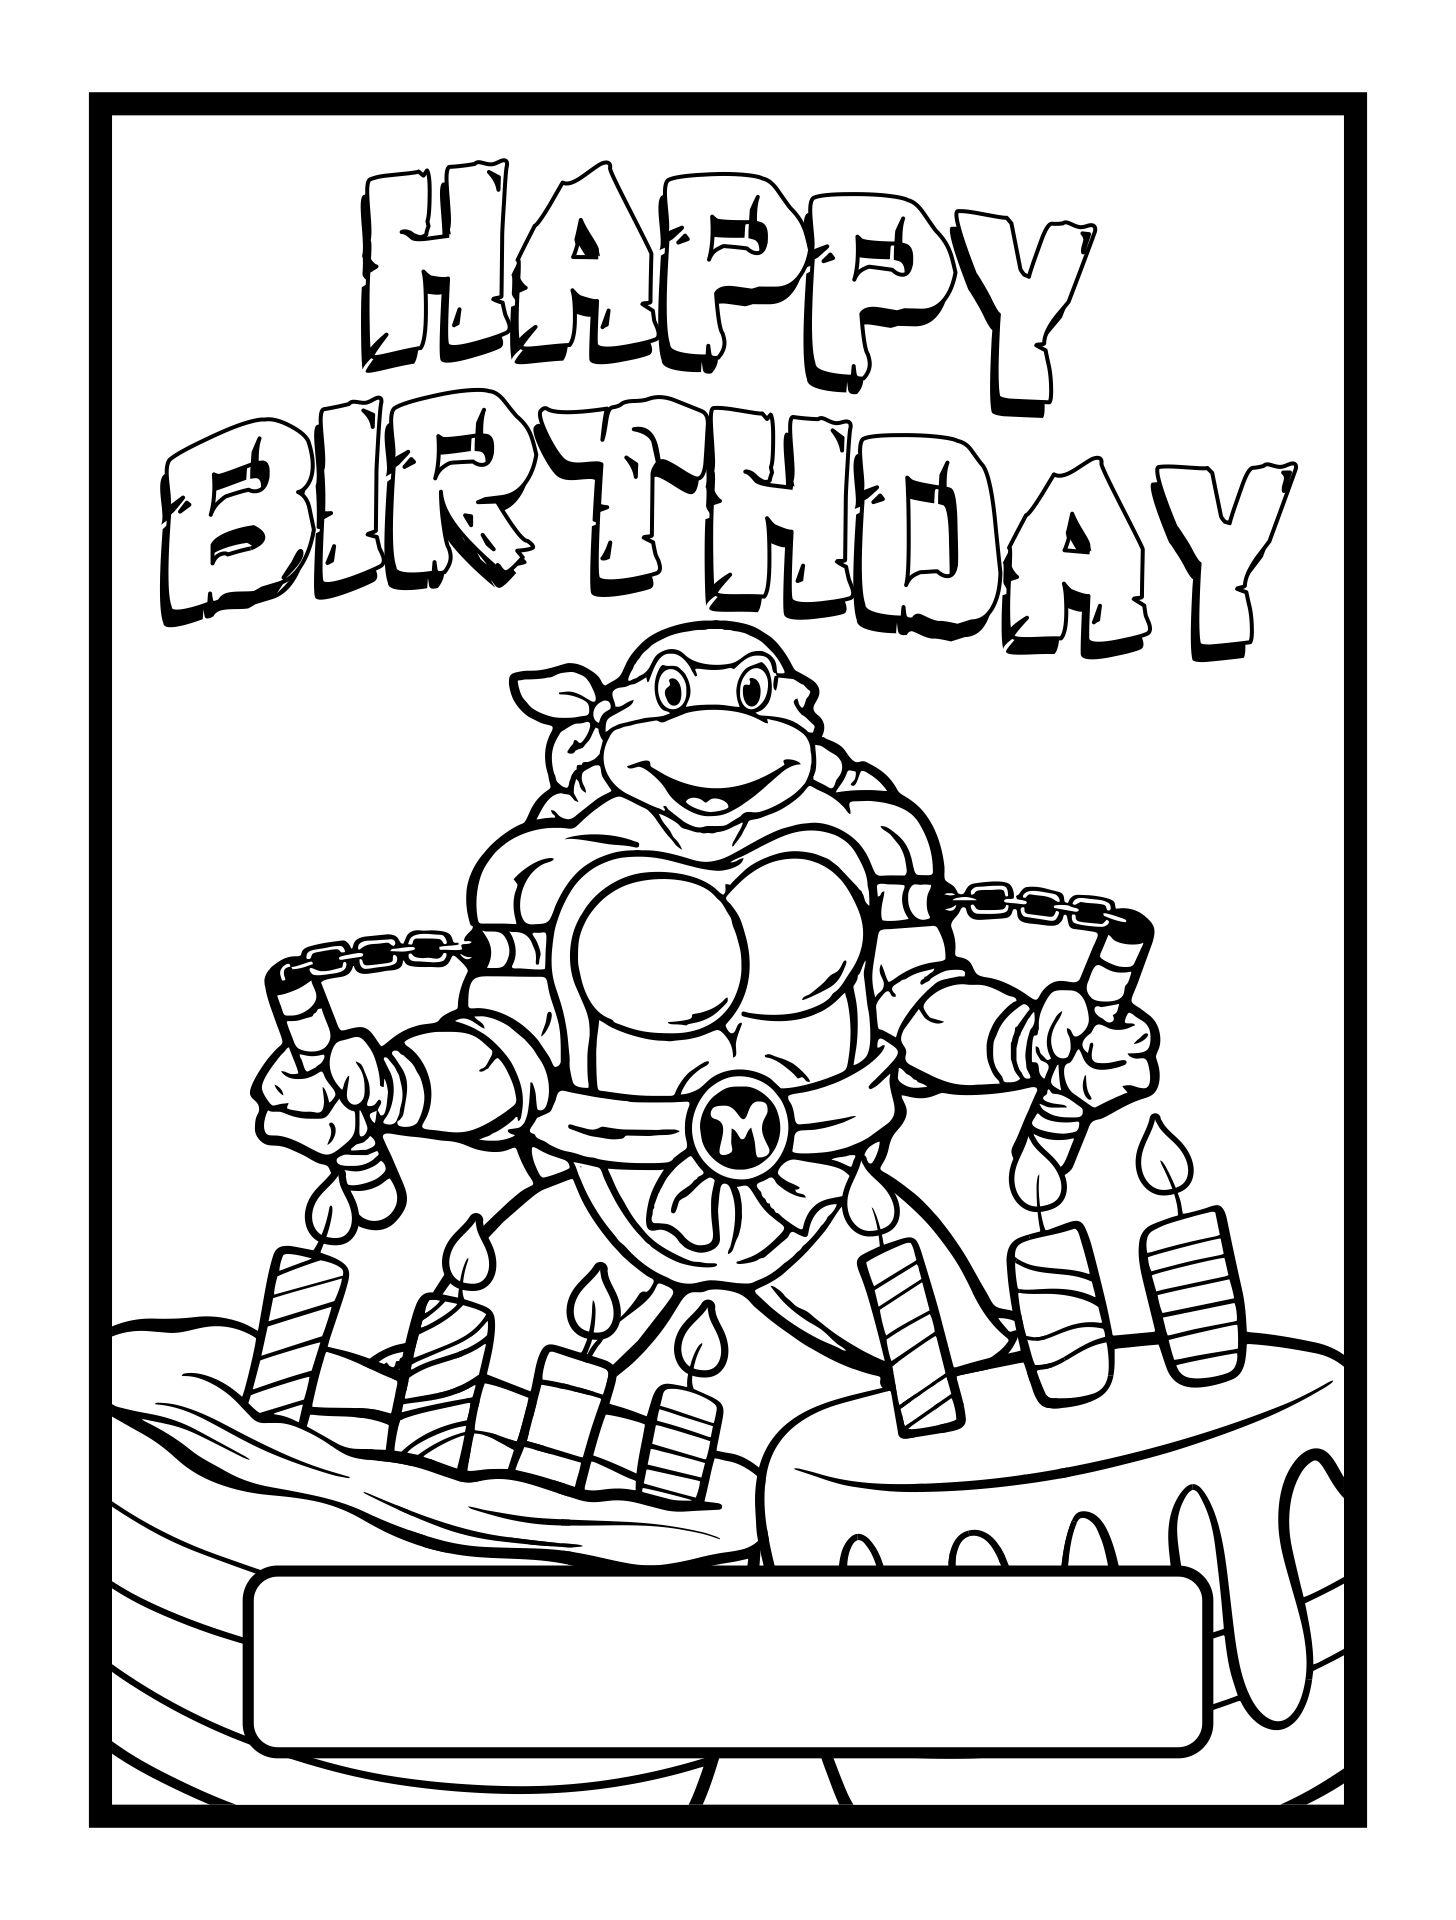 Printable Michaelangelo Birthday Greeting Card Ninja Turtles